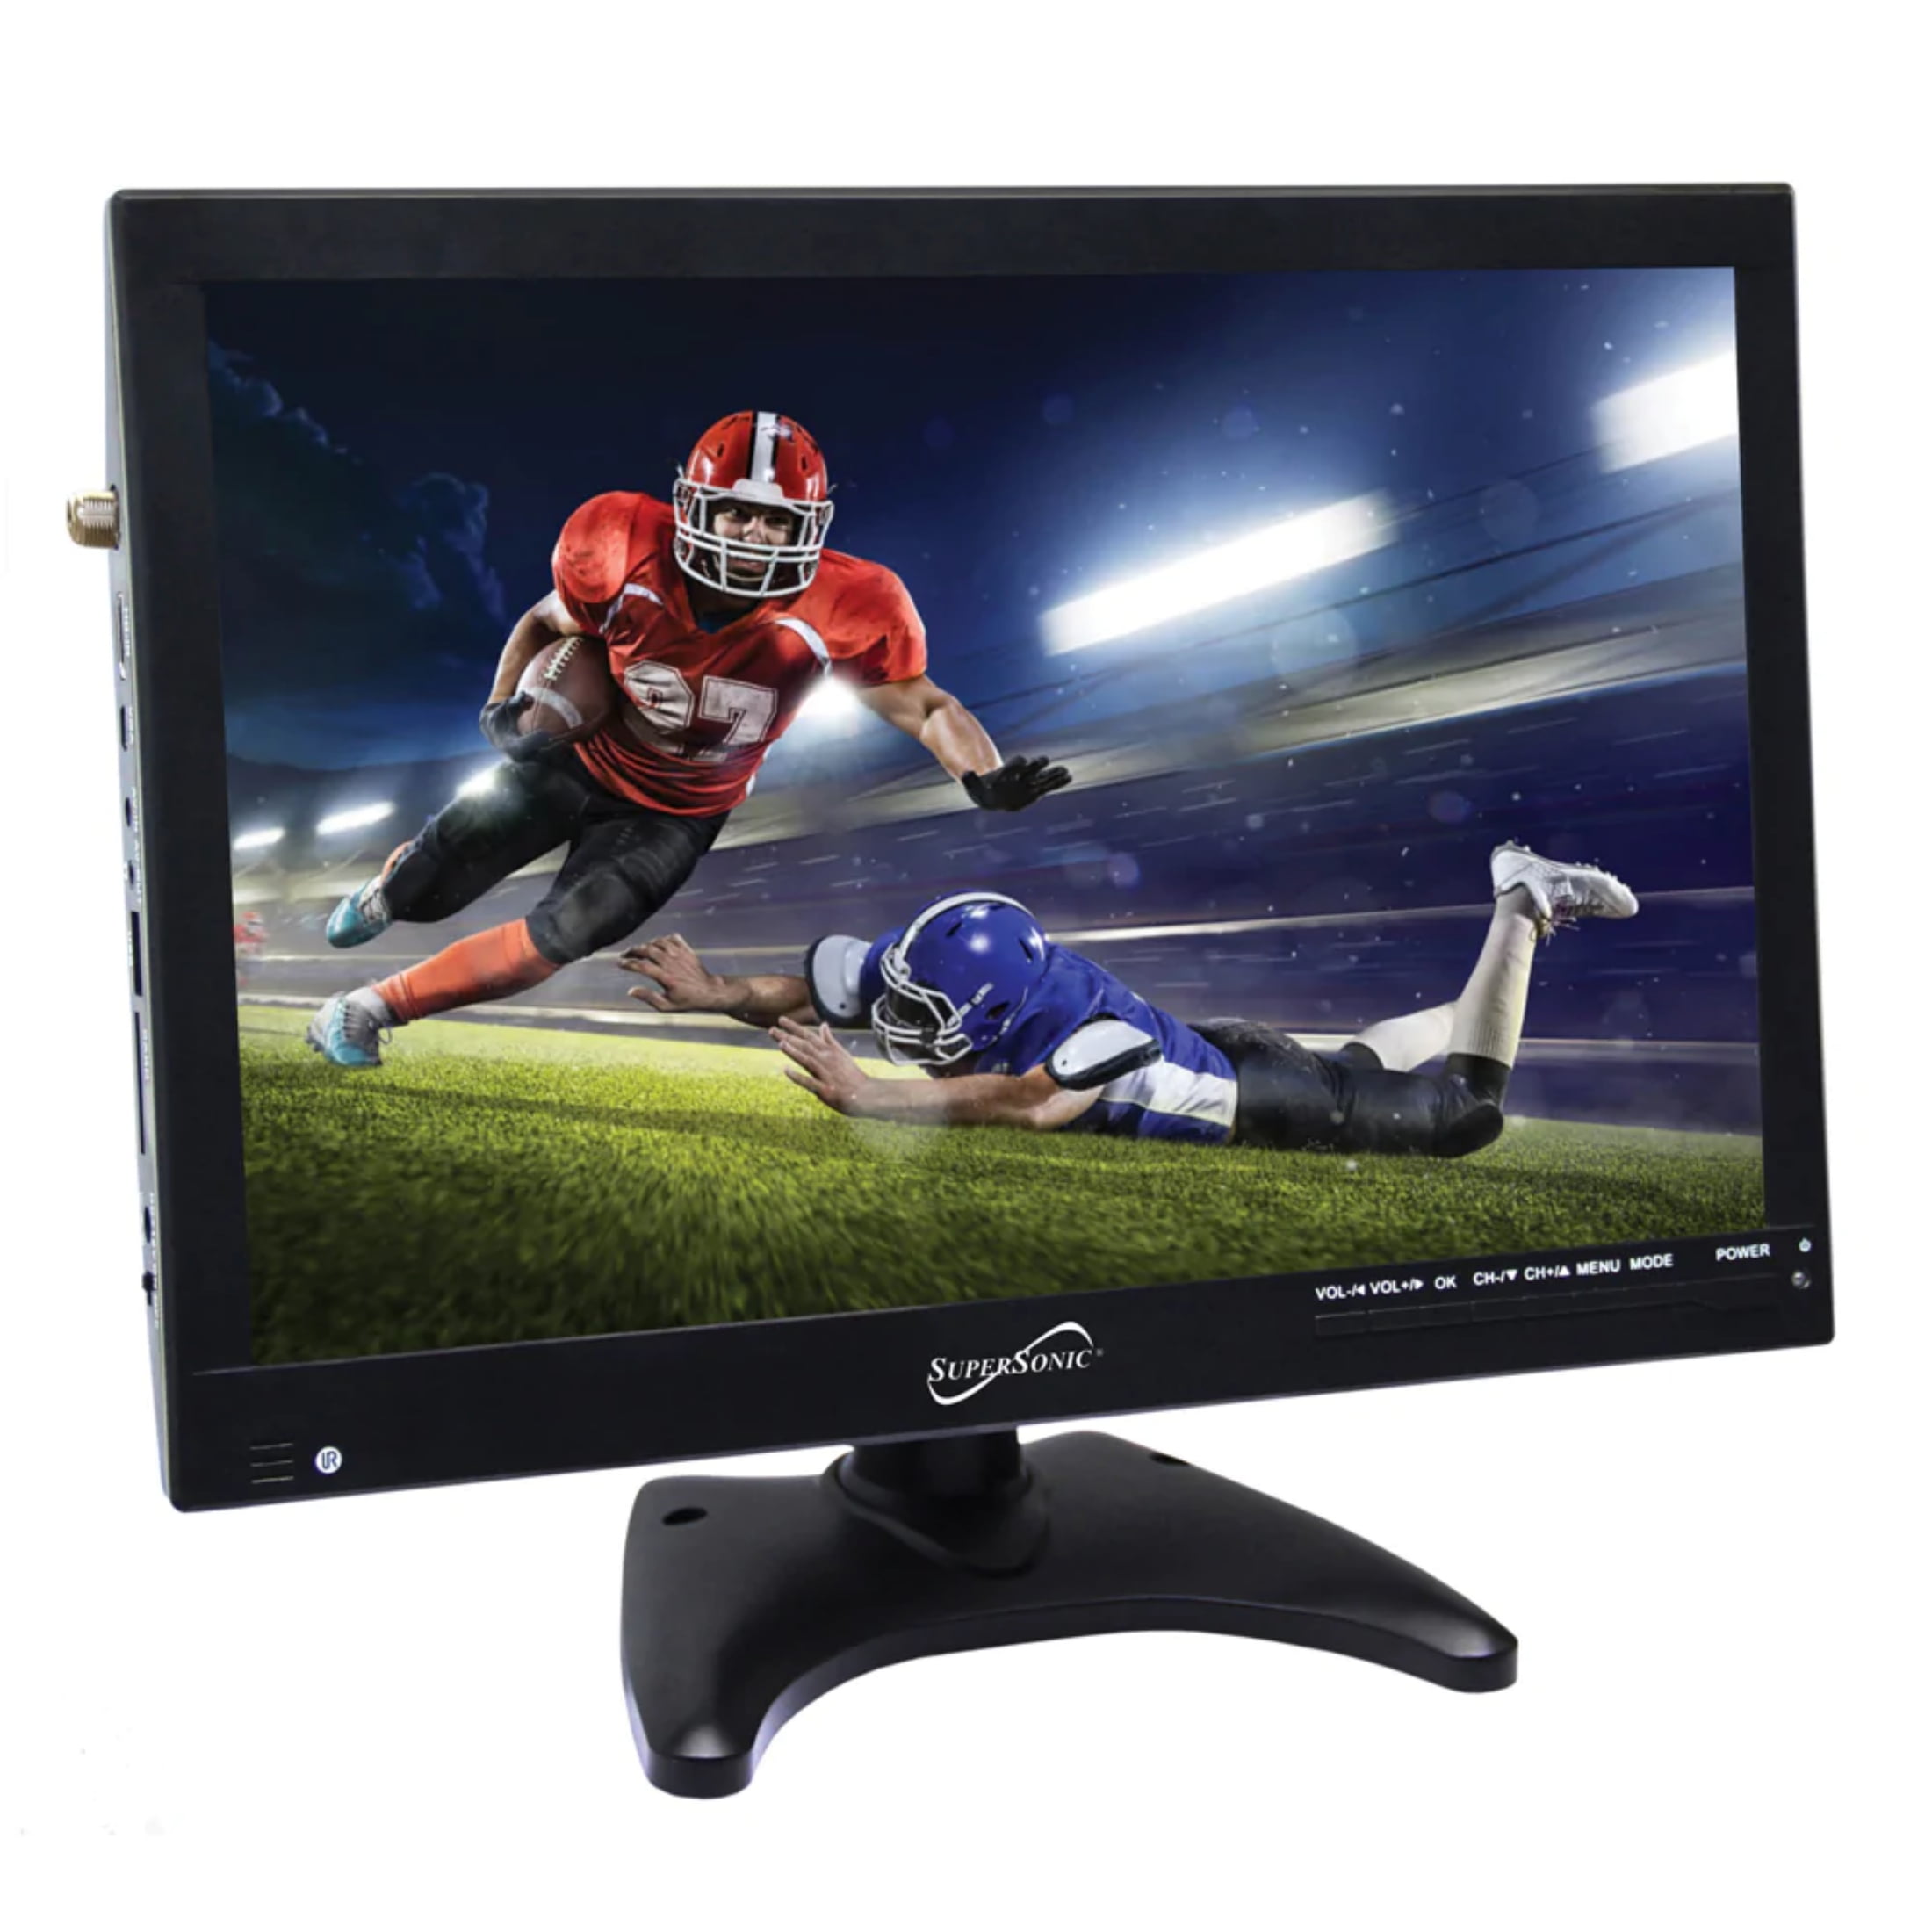 Supersonic 14" Portable Digital LED TV with USB, SD and HDMI Inputs, 12 Volt Compatible (SC-2814) - Walmart.com